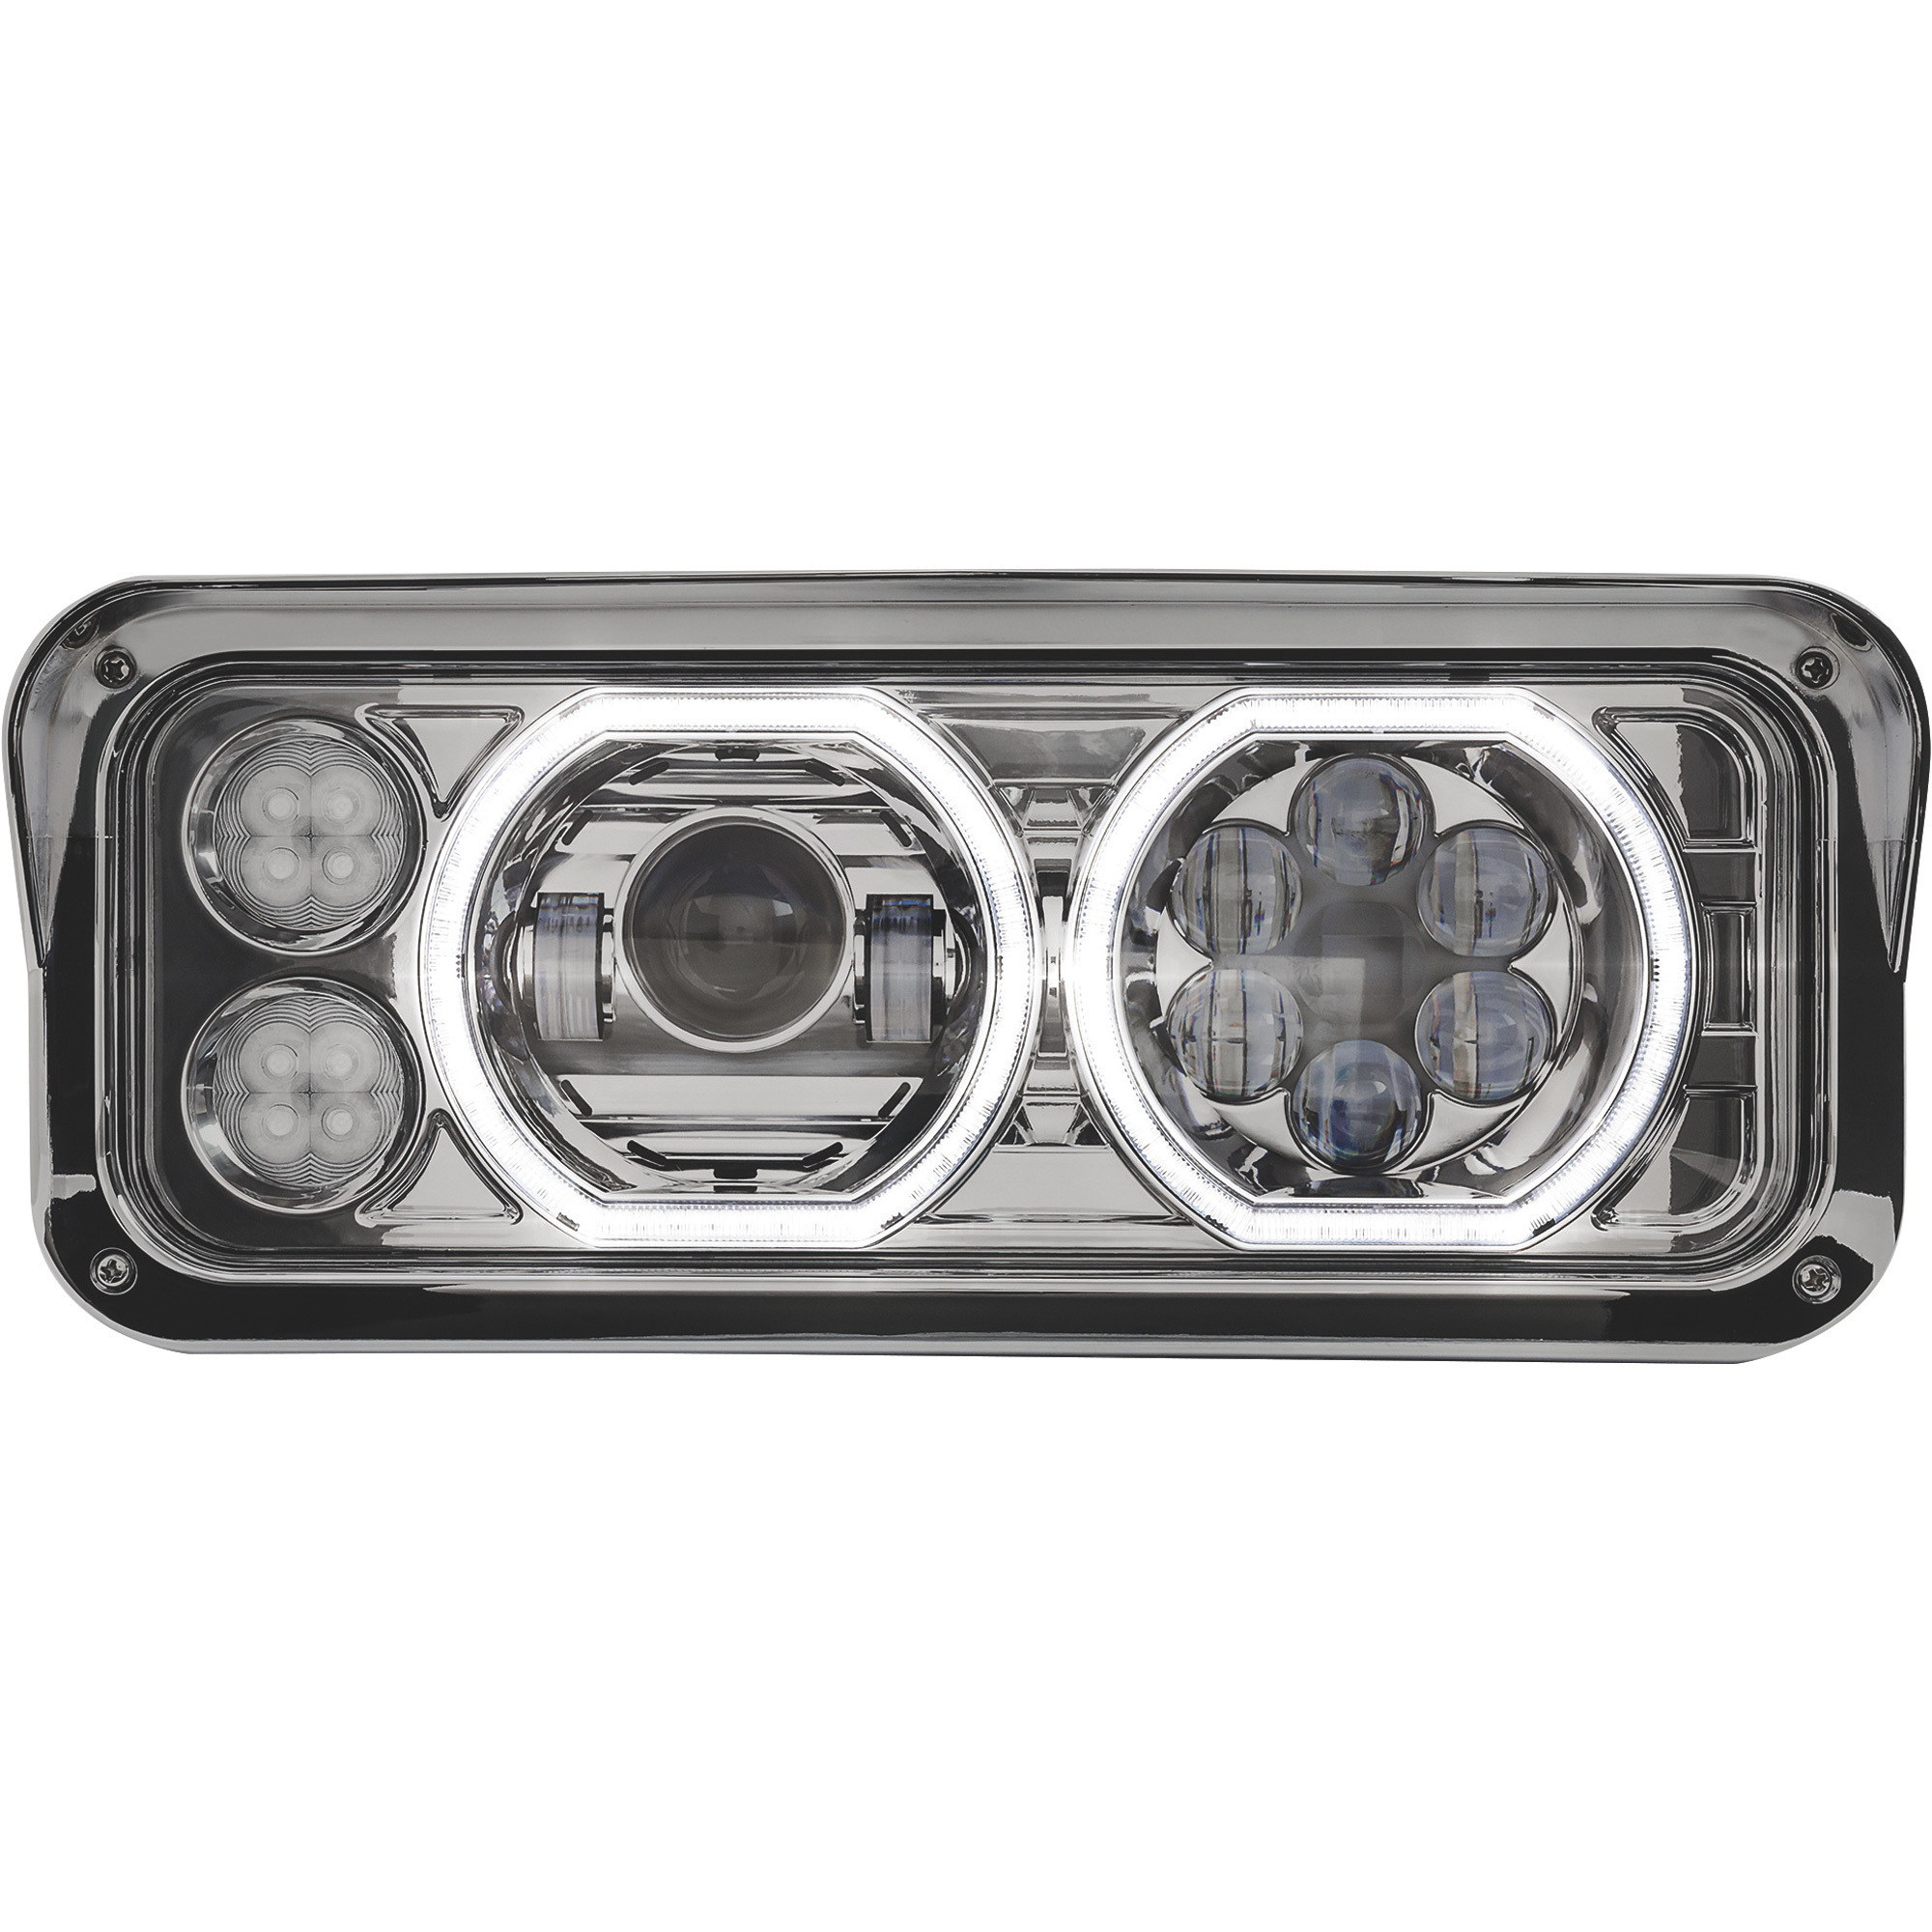 Trux Universal LED Projector Semi-Truck Headlight Assembly â Chrome, Driver's Side, Model TLED-H120